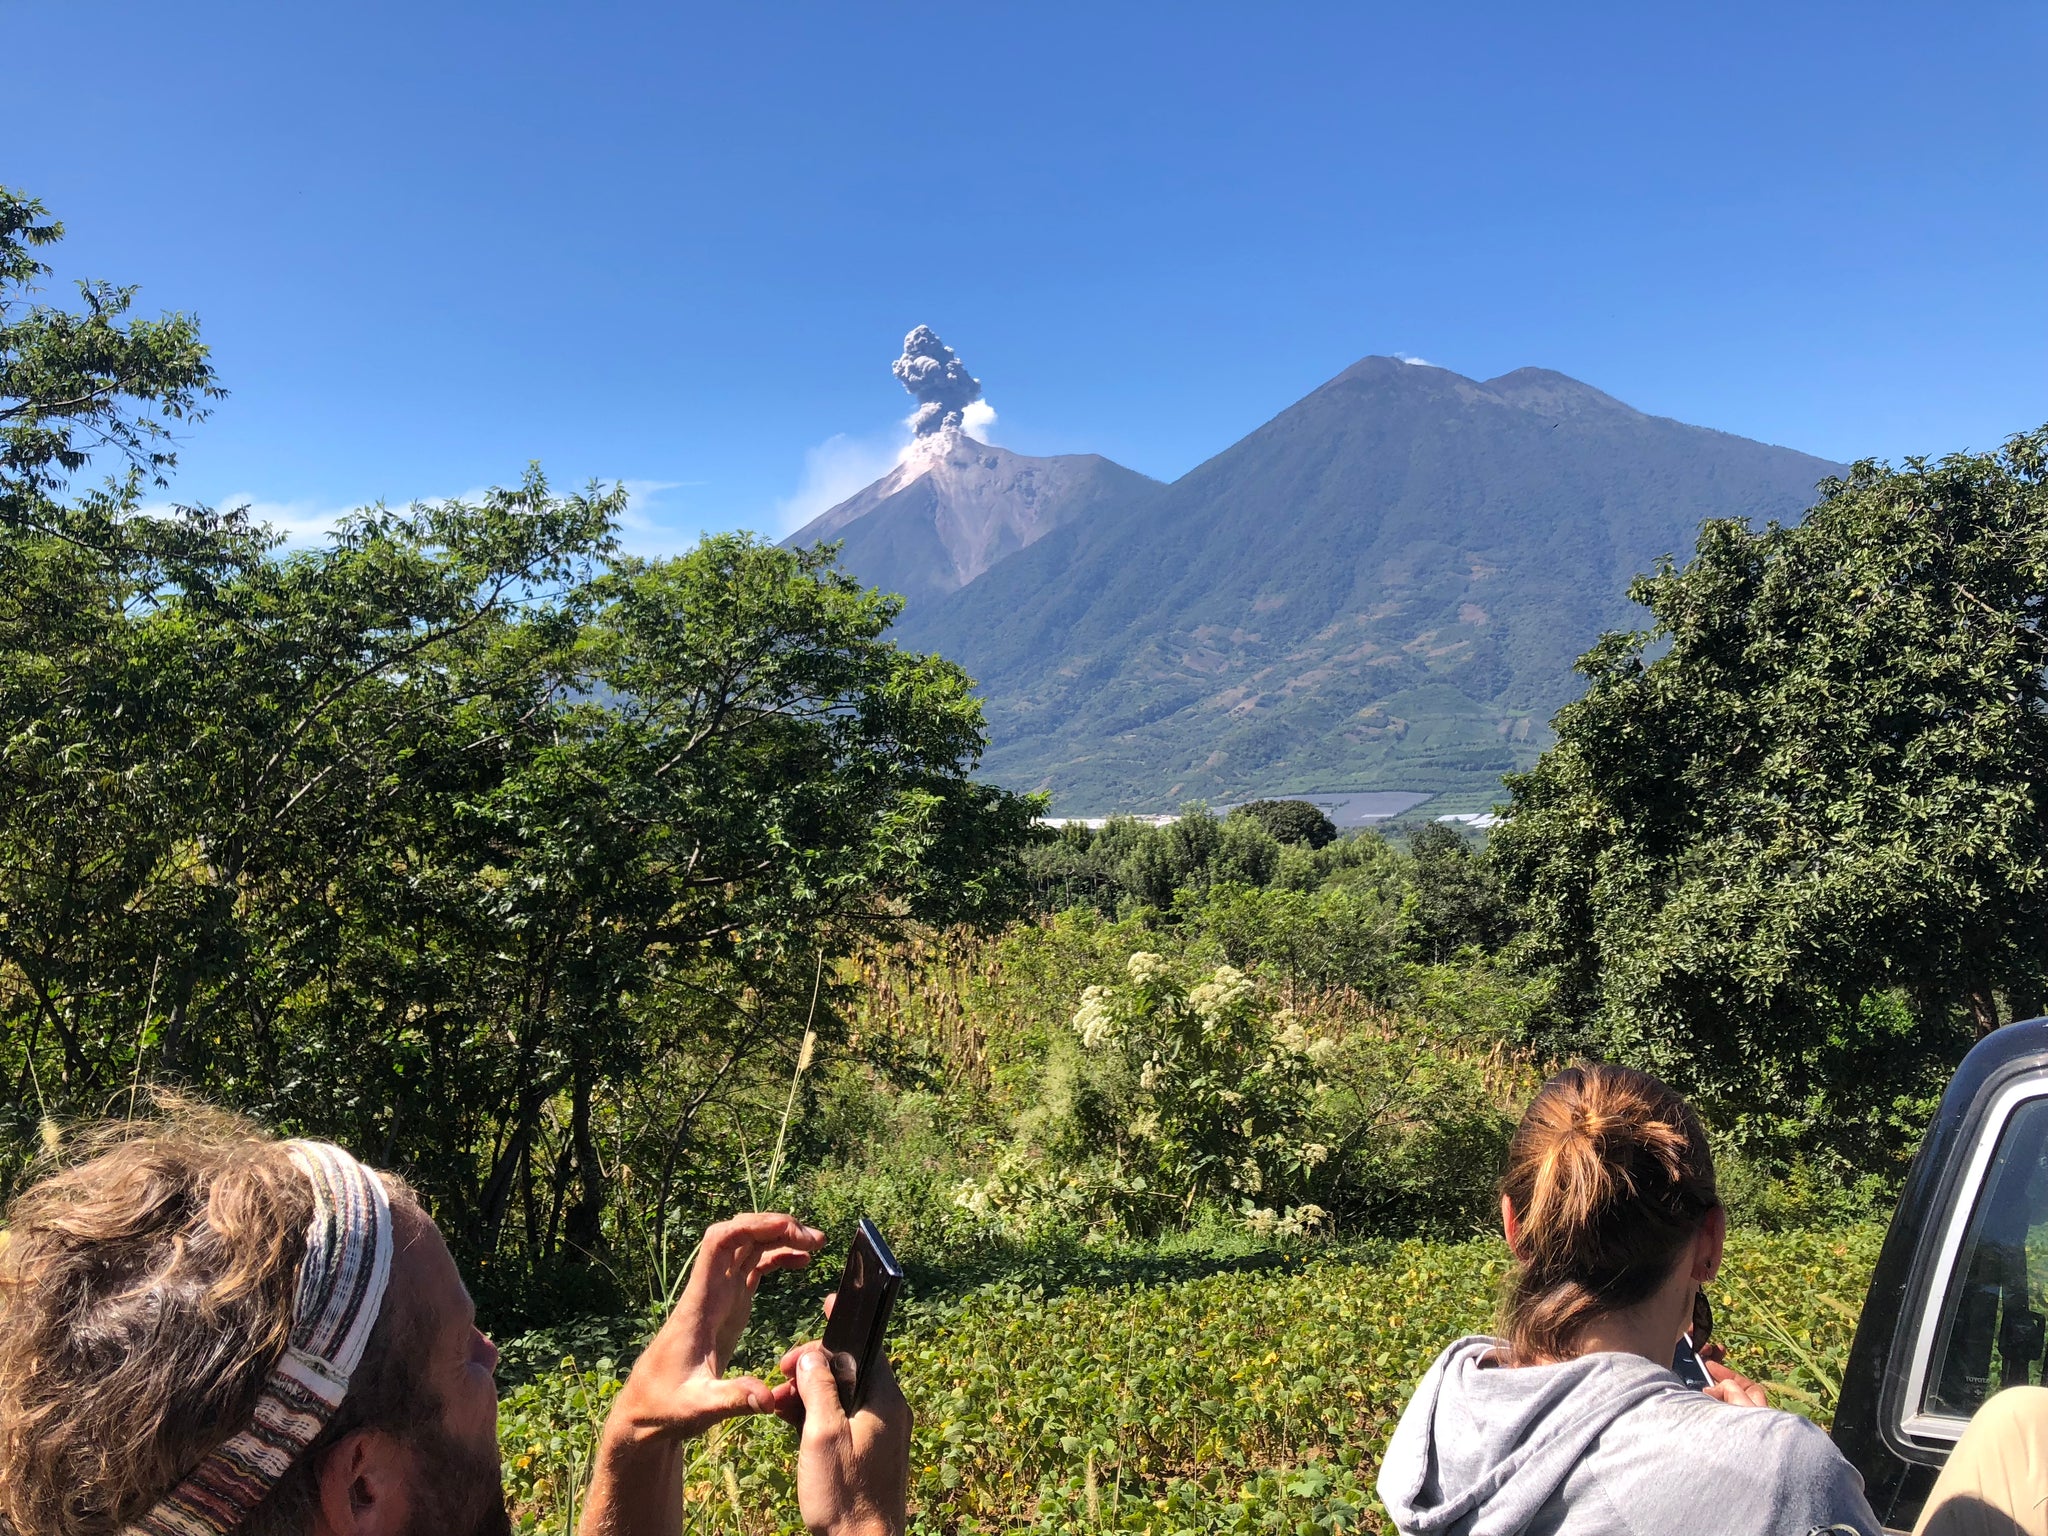 Day 4 in Guatemala